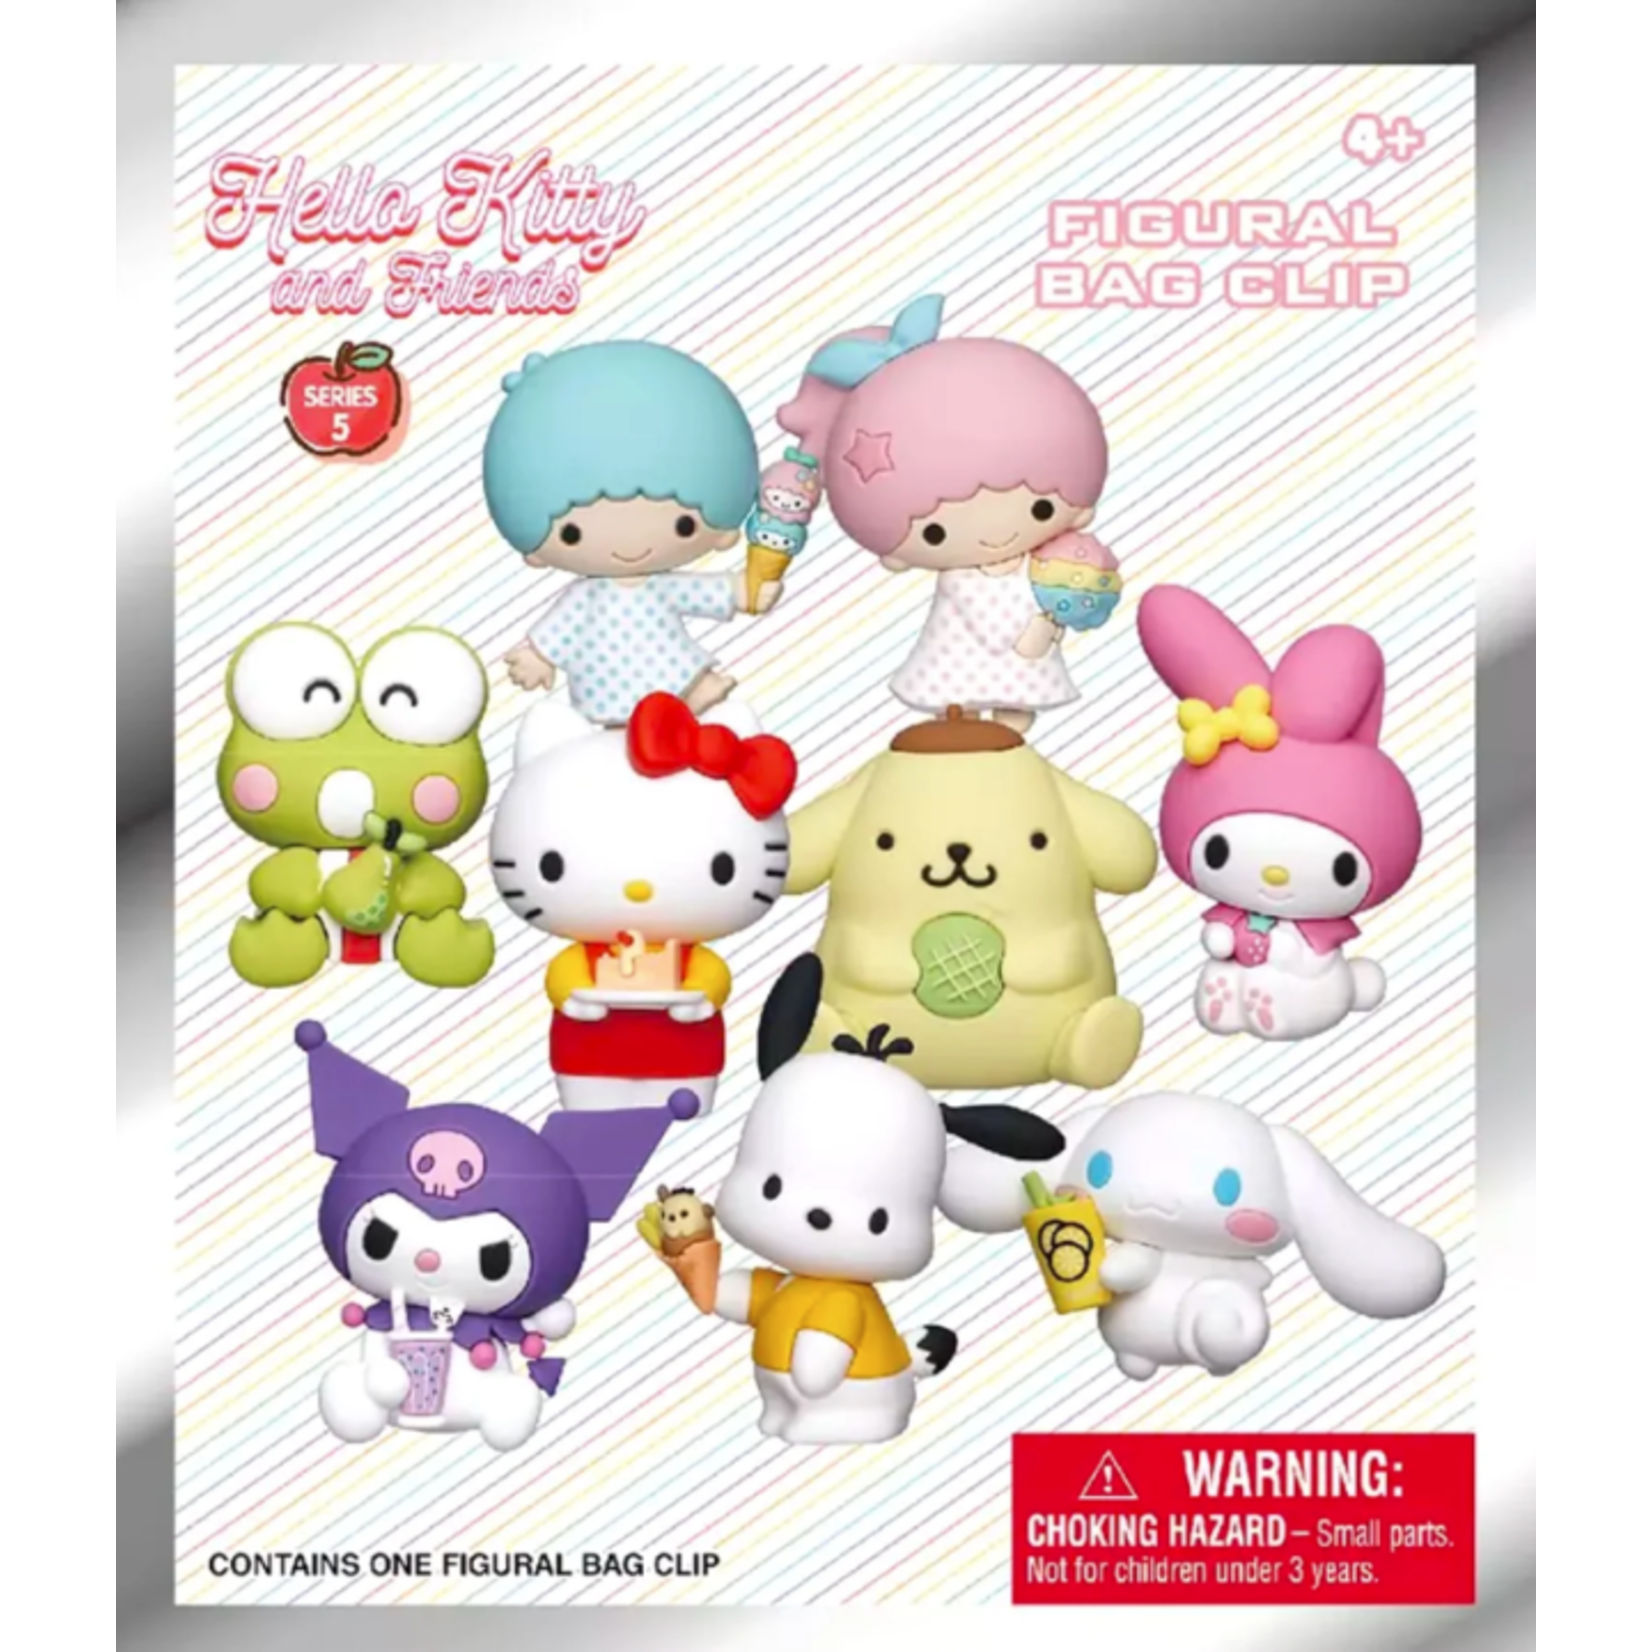 Sanrio Sanrio - Hello Kitty and Friends 3D Bag Clips - Series 5